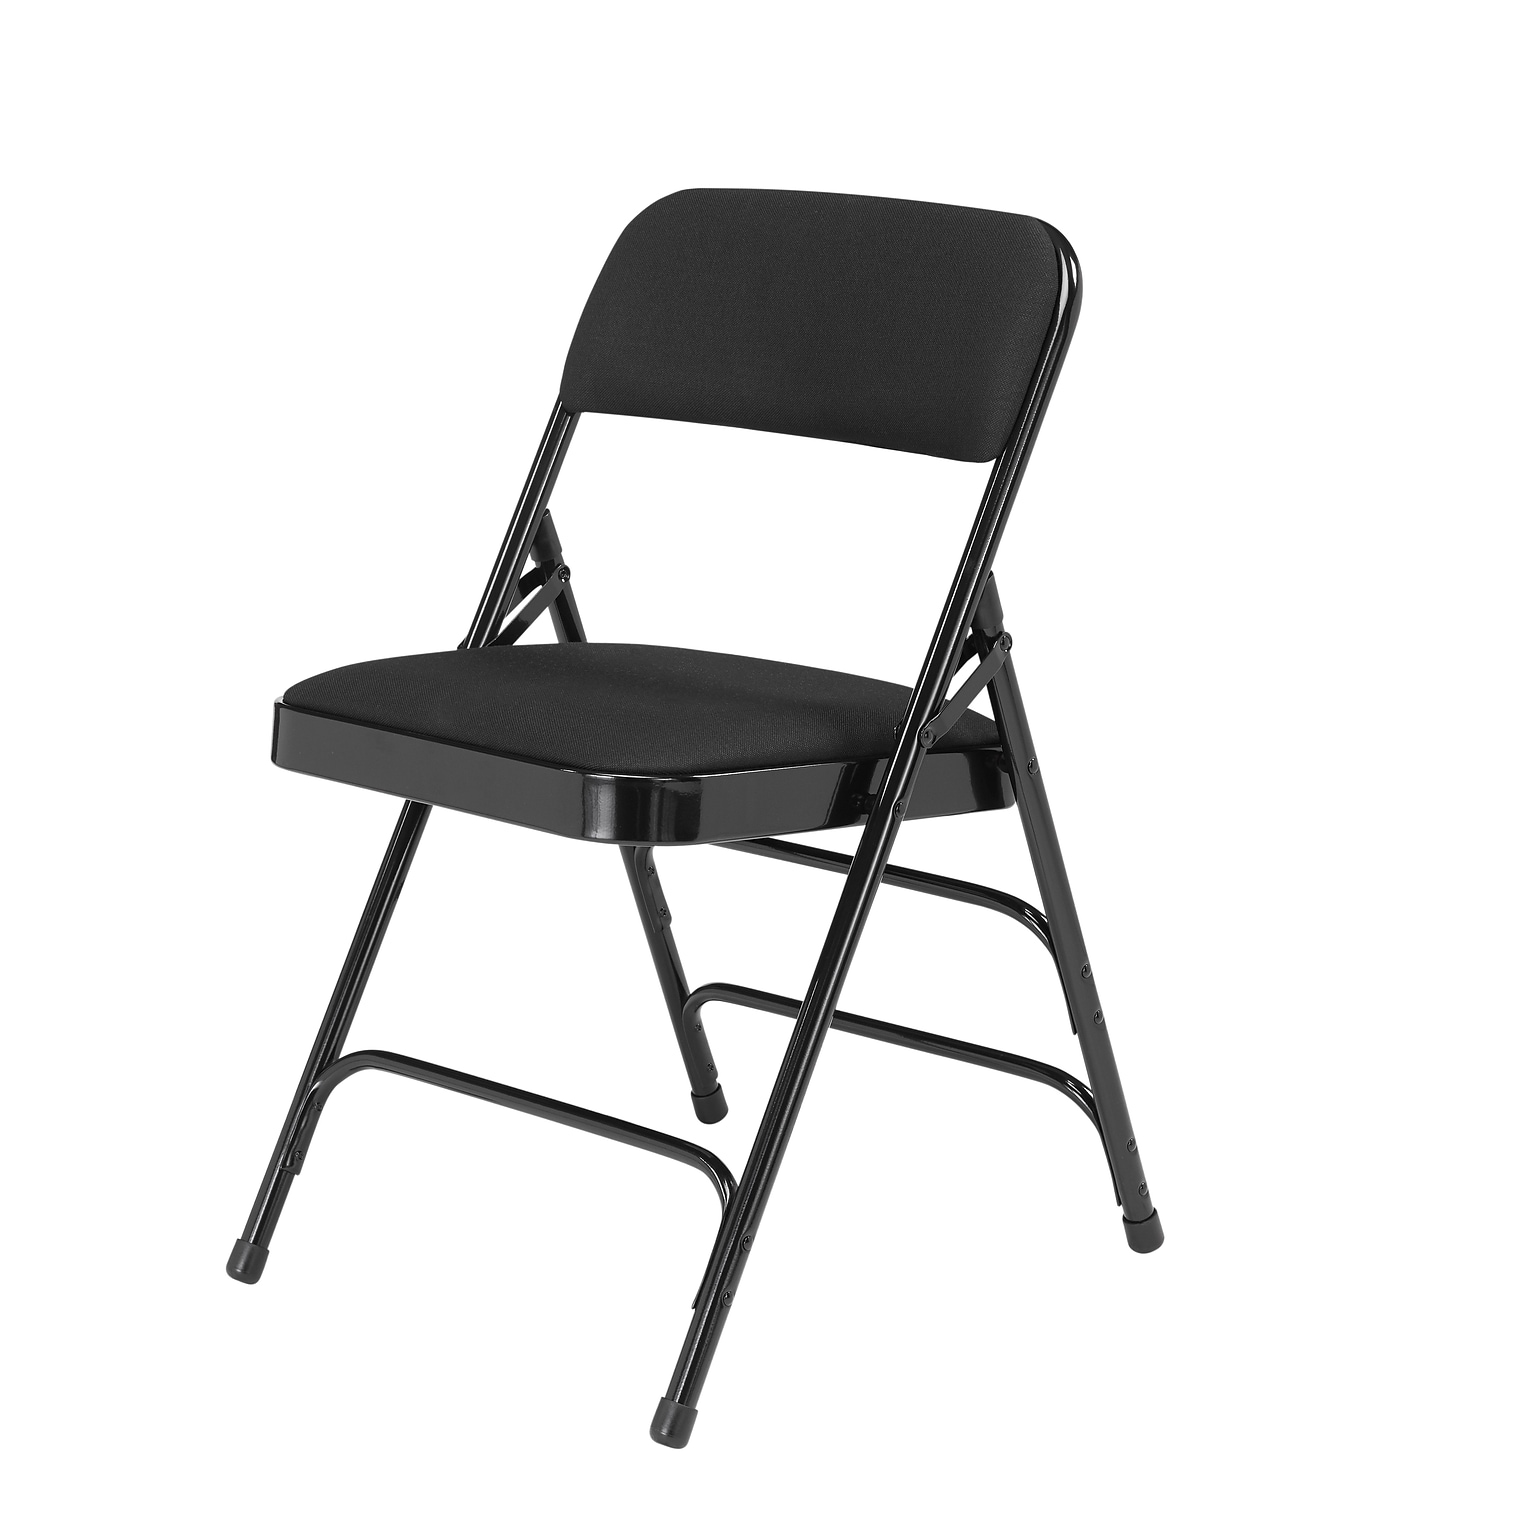 NPS 2300 Series Fabric Padded Triple Brace Double Hinge Premium Folding Chairs, Midnight Black/Black, 100 Pack (2310/100)